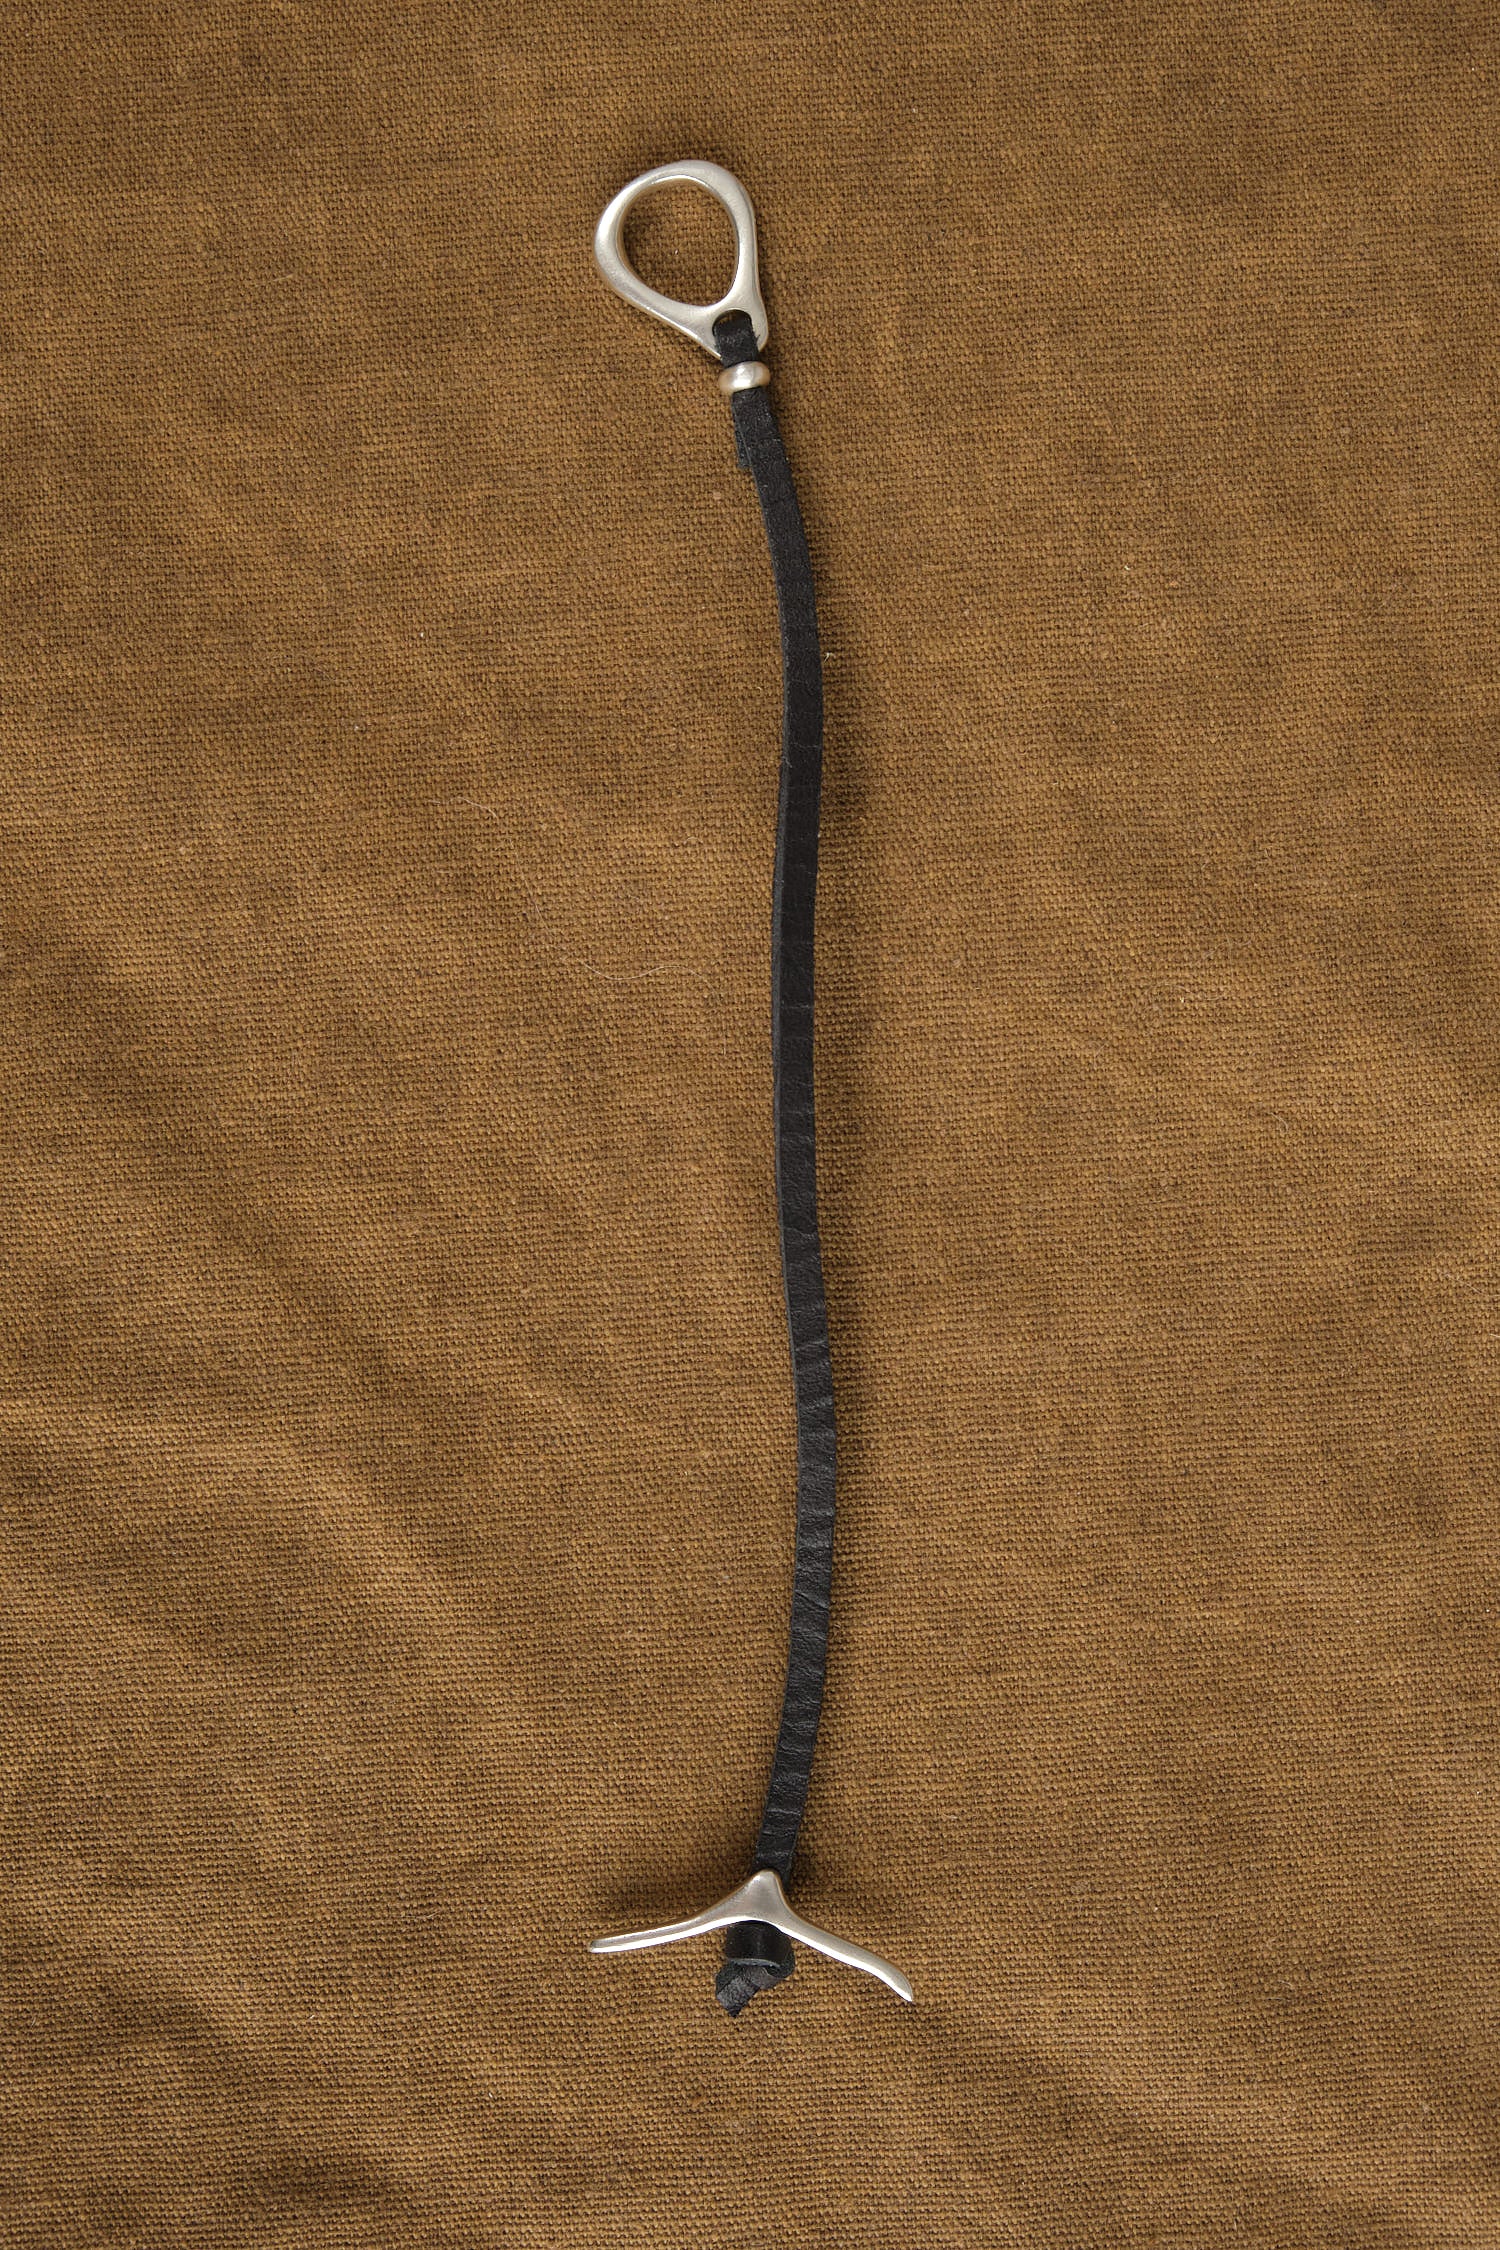 JP Clasp Rawhide Bracelet in Black long